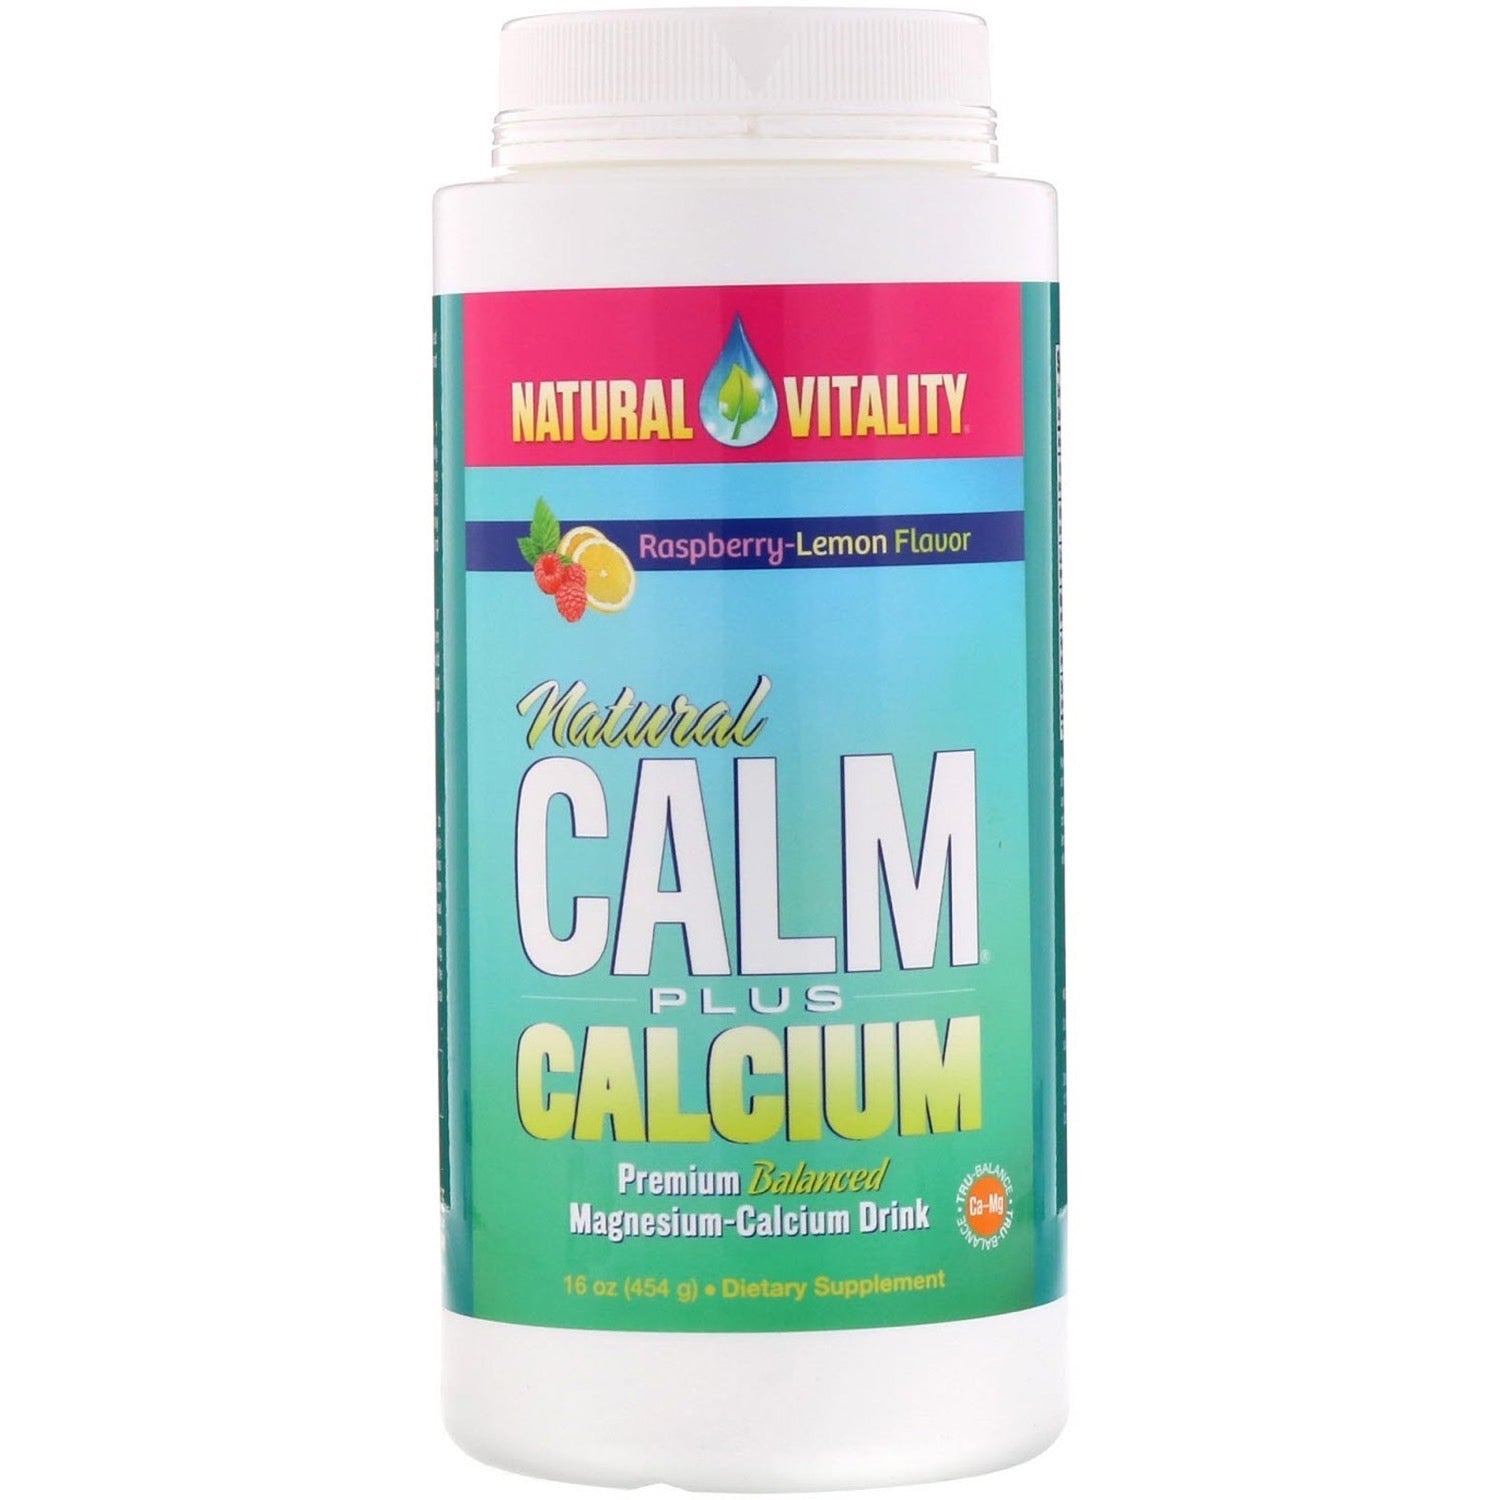 Natural Vitality Calm Plus Calcium, Raspberry Lemon, 16 Ounce